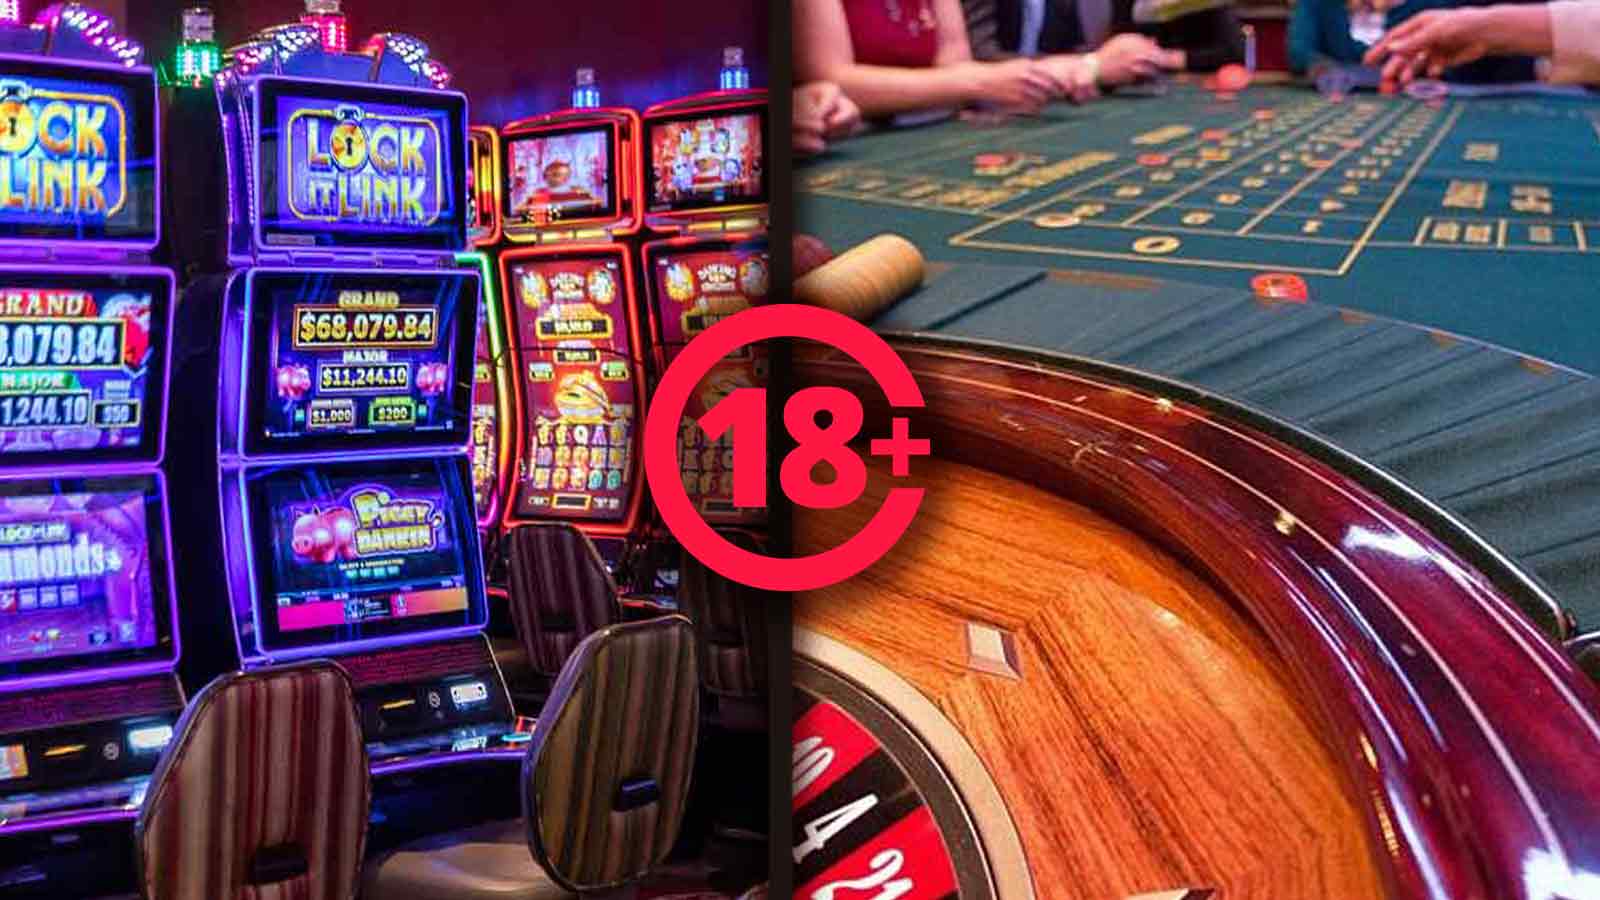 Irish legal gambling and casino game type